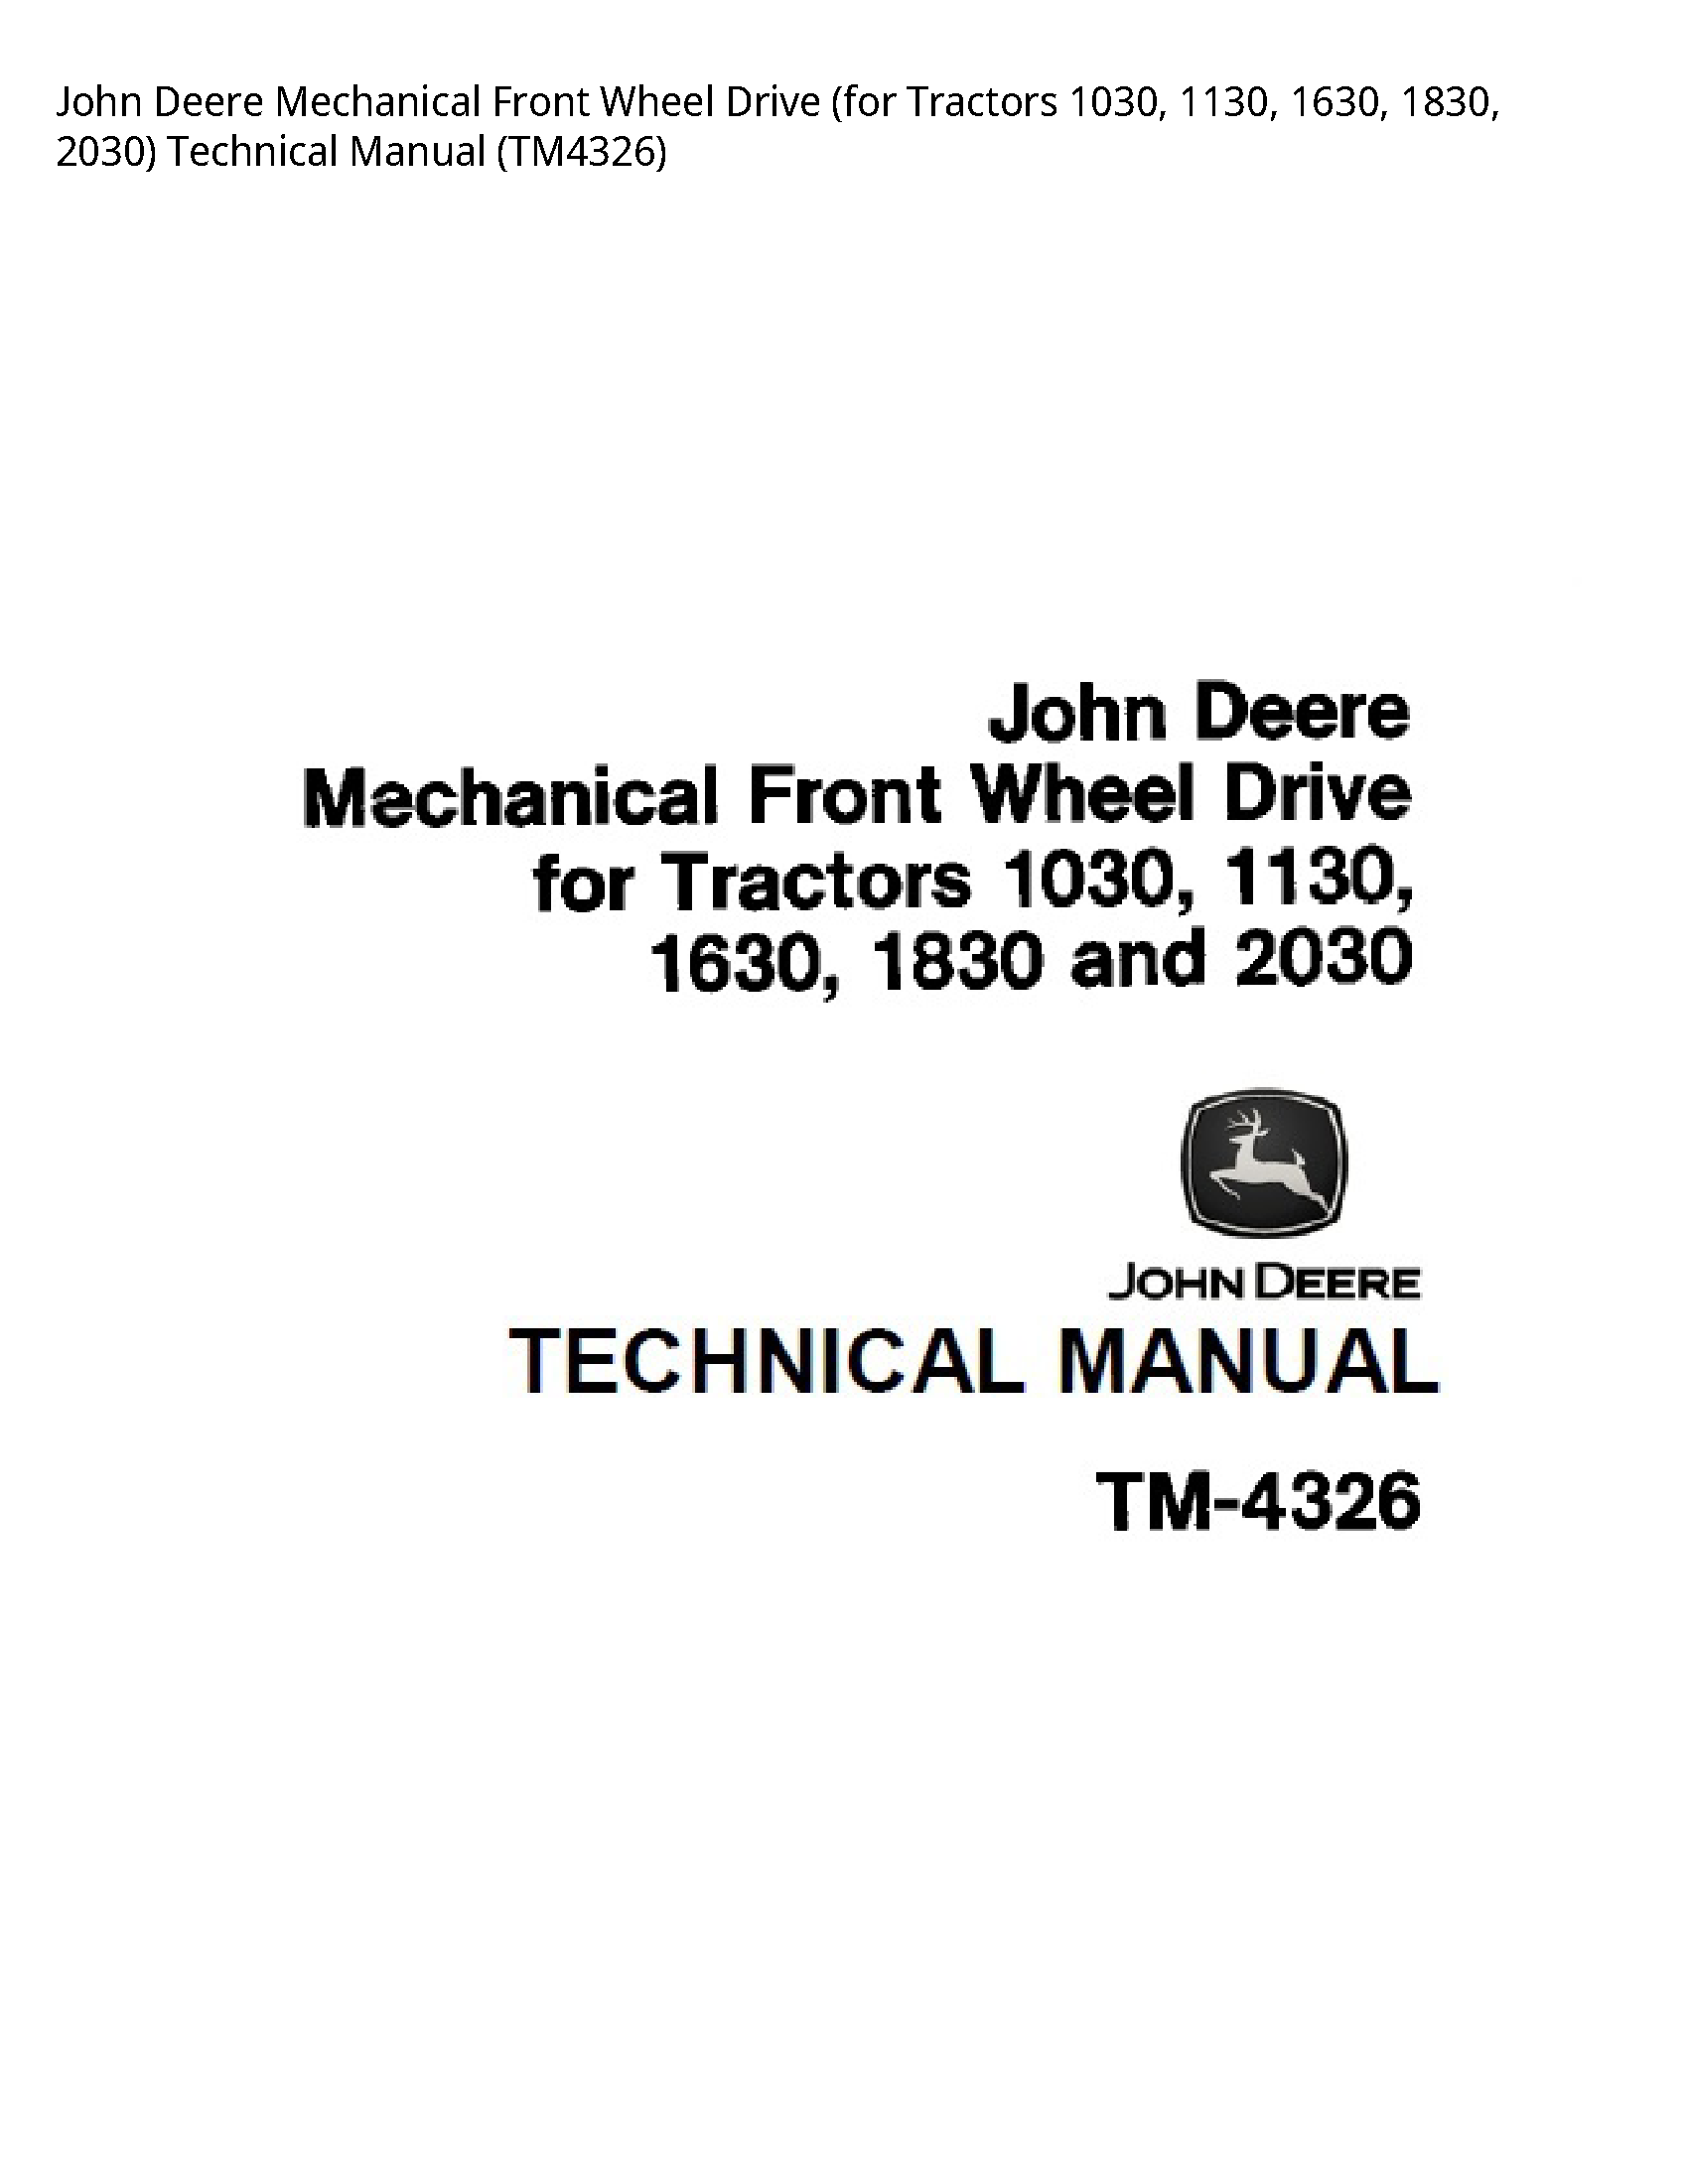 John Deere 1030 Mechanical Front Wheel Drive for Tractors Technical manual